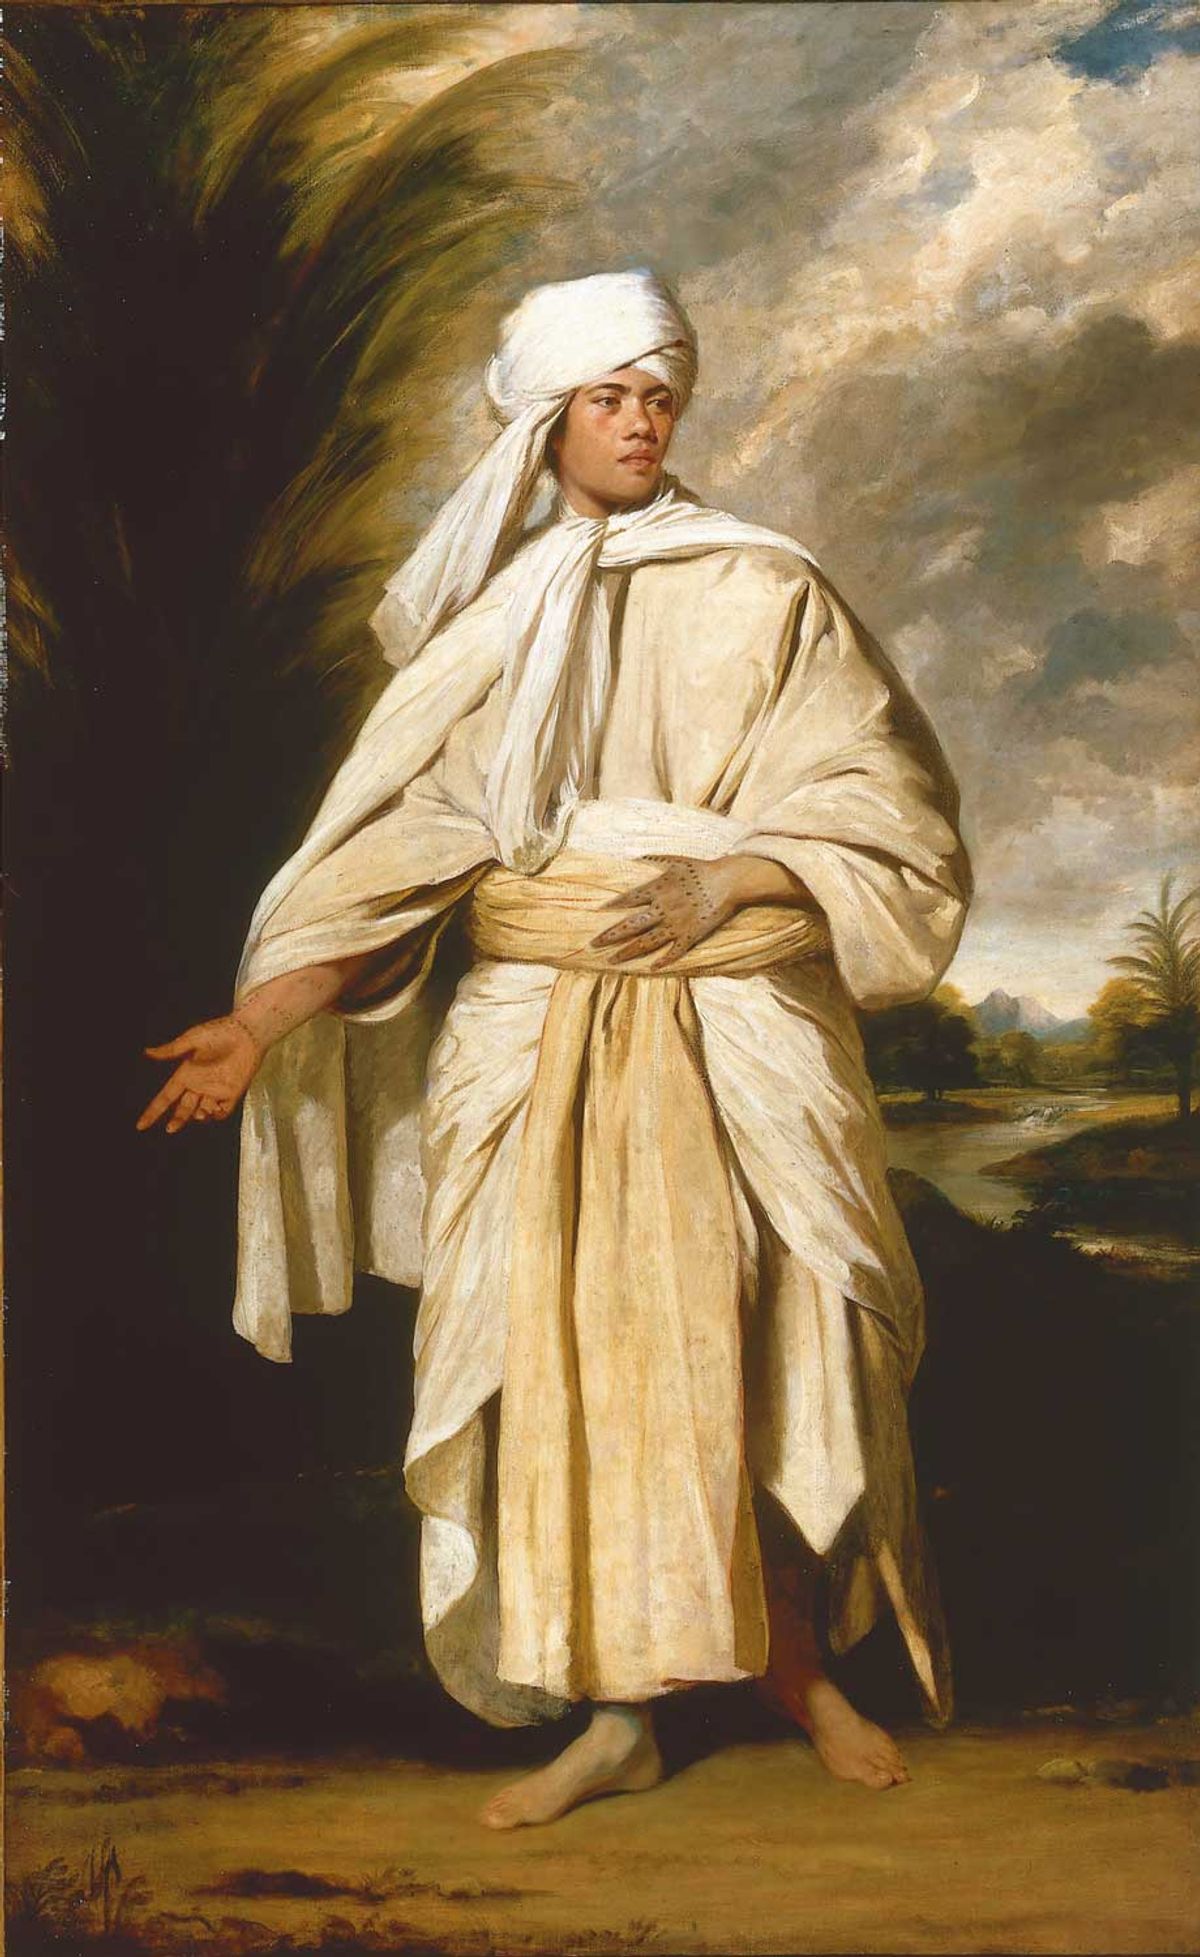 Joshua Reynolds's Portrait of Omai (around 1776) Courtesy of the National Portrait Gallery, London